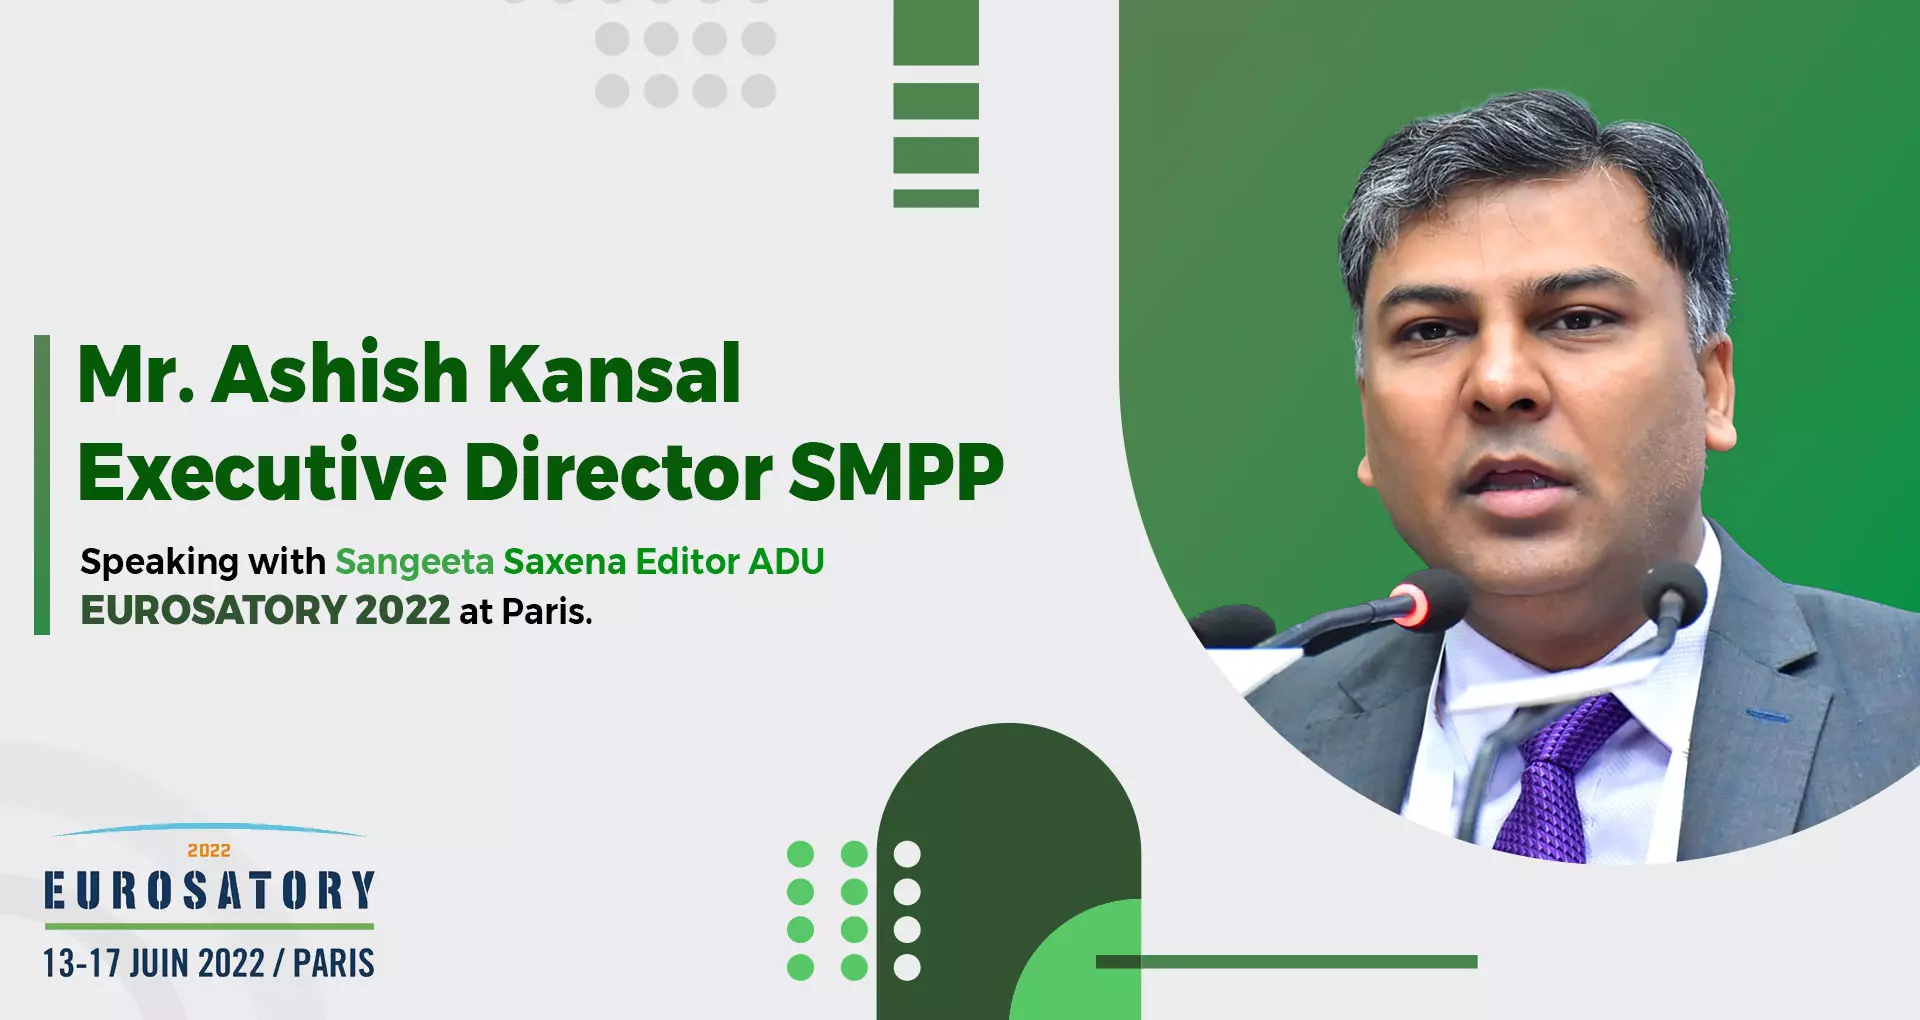 Ashish Kansal Executive Director SMPP speaking with Sangeeta Saxena Editor ADU Eurosatory 2022 at Paris.